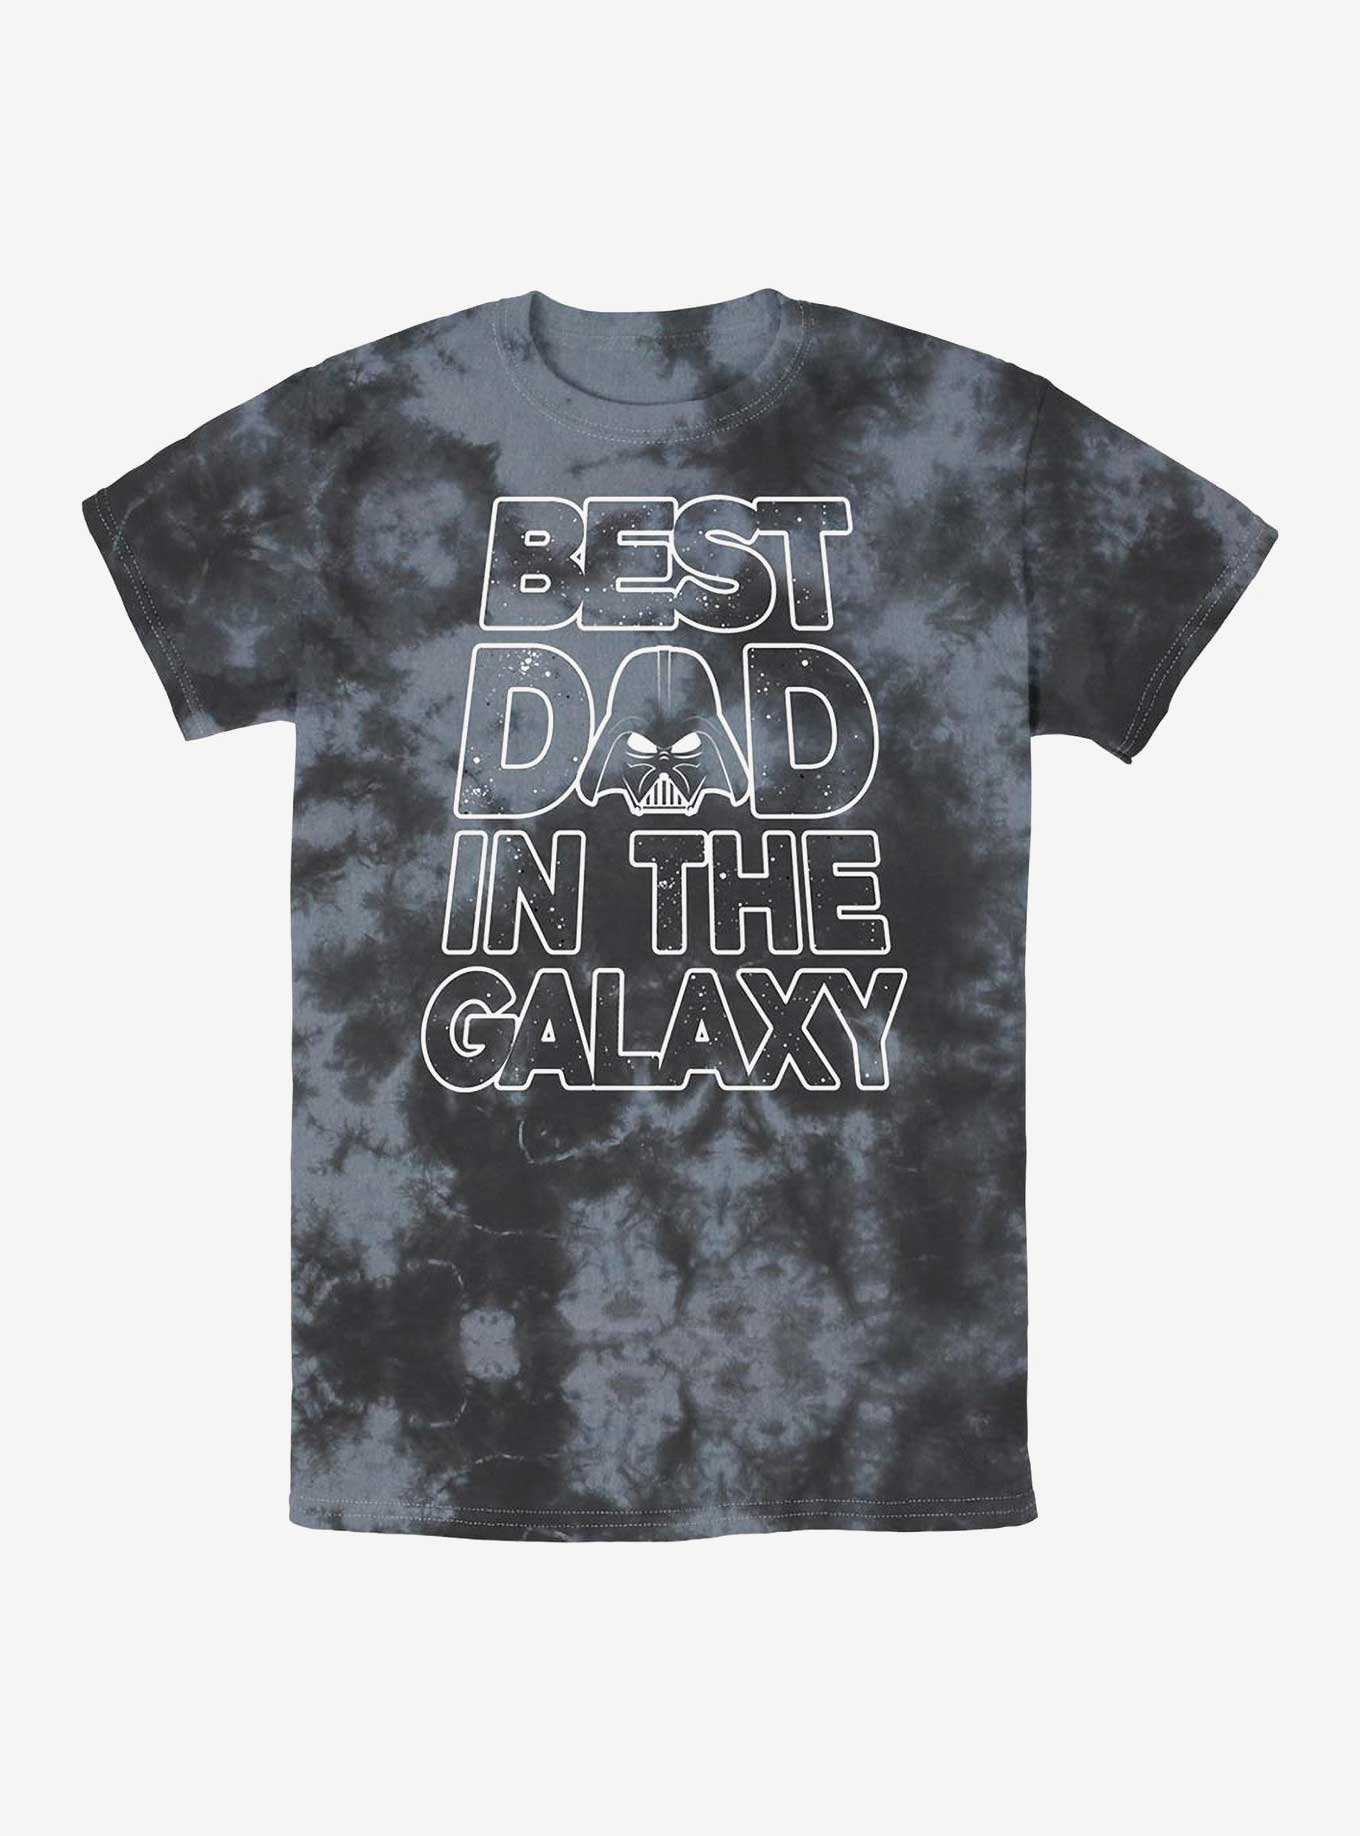 Star Wars Vader Galaxy Dad Tie-Dye T-Shirt, , hi-res